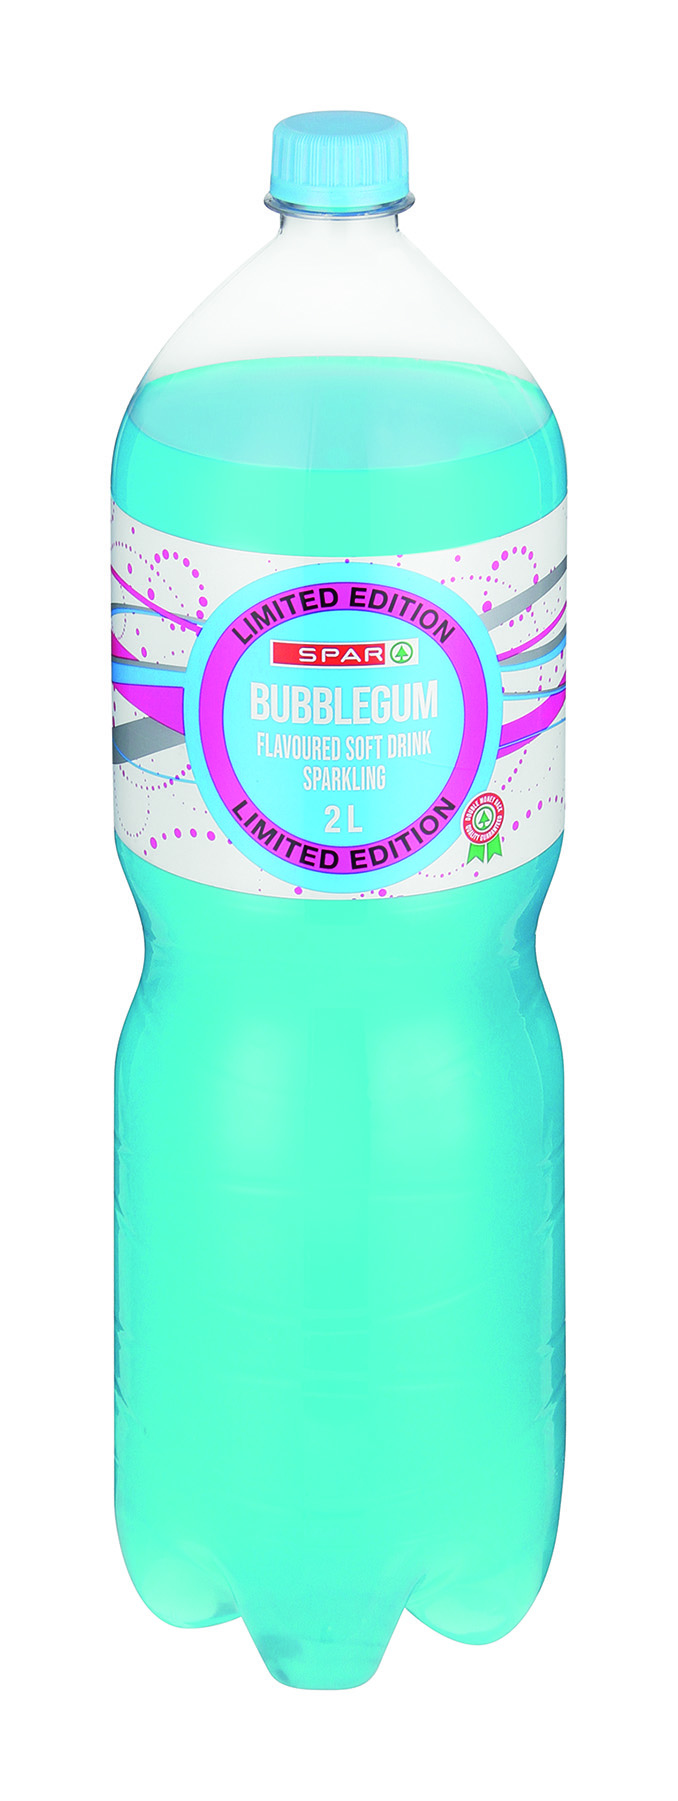 carbonated soft drink bubblegum